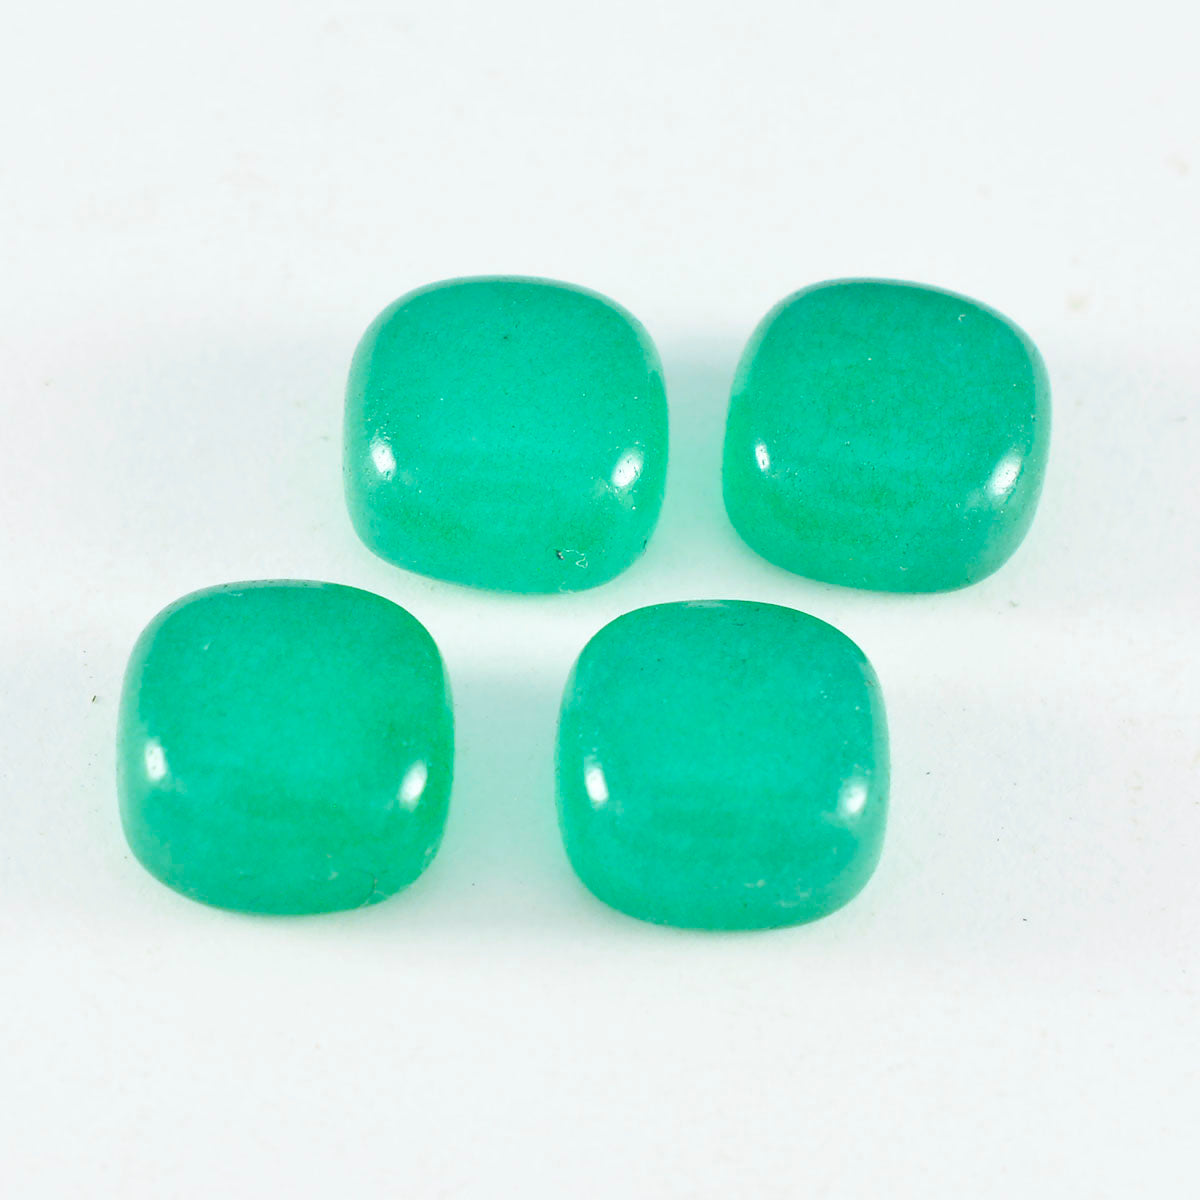 Riyogems 1PC Green Onyx Cabochon 6x6 mm Cushion Shape AA Quality Loose Stone